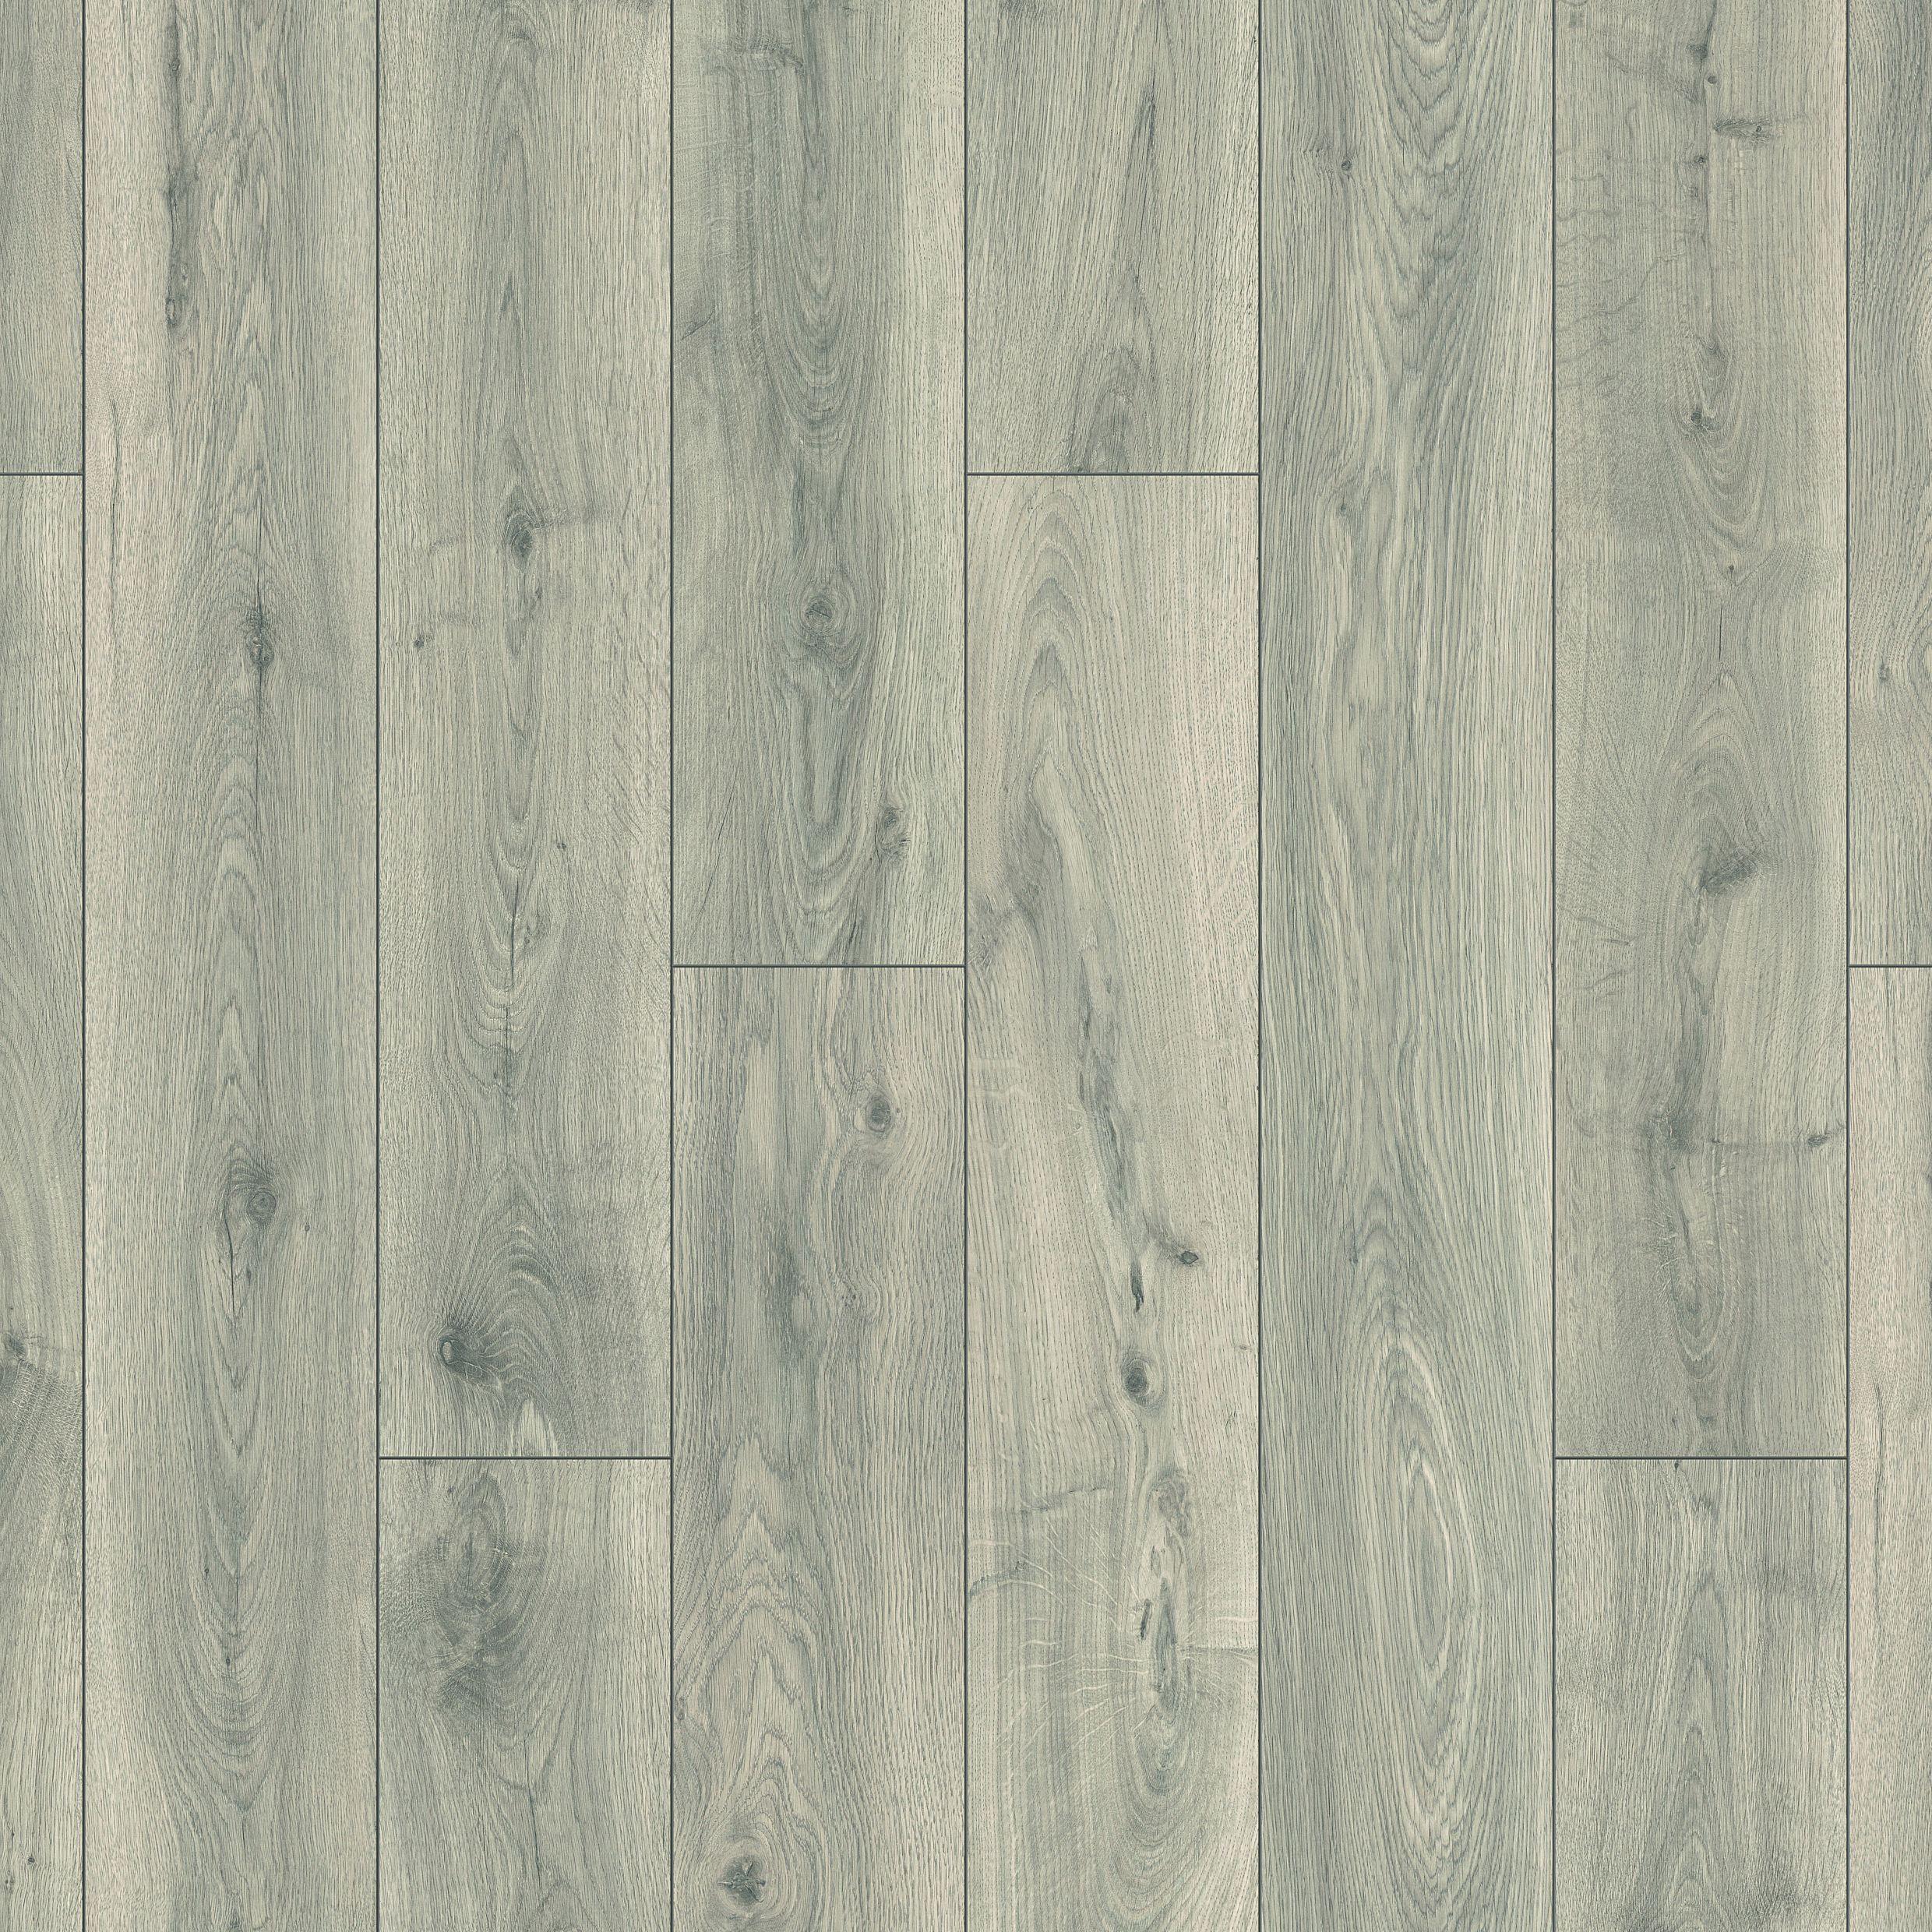 Image of Atlantic Silverdale Oak 8mm Moisture Resistant Laminate Flooring - 2.22m2